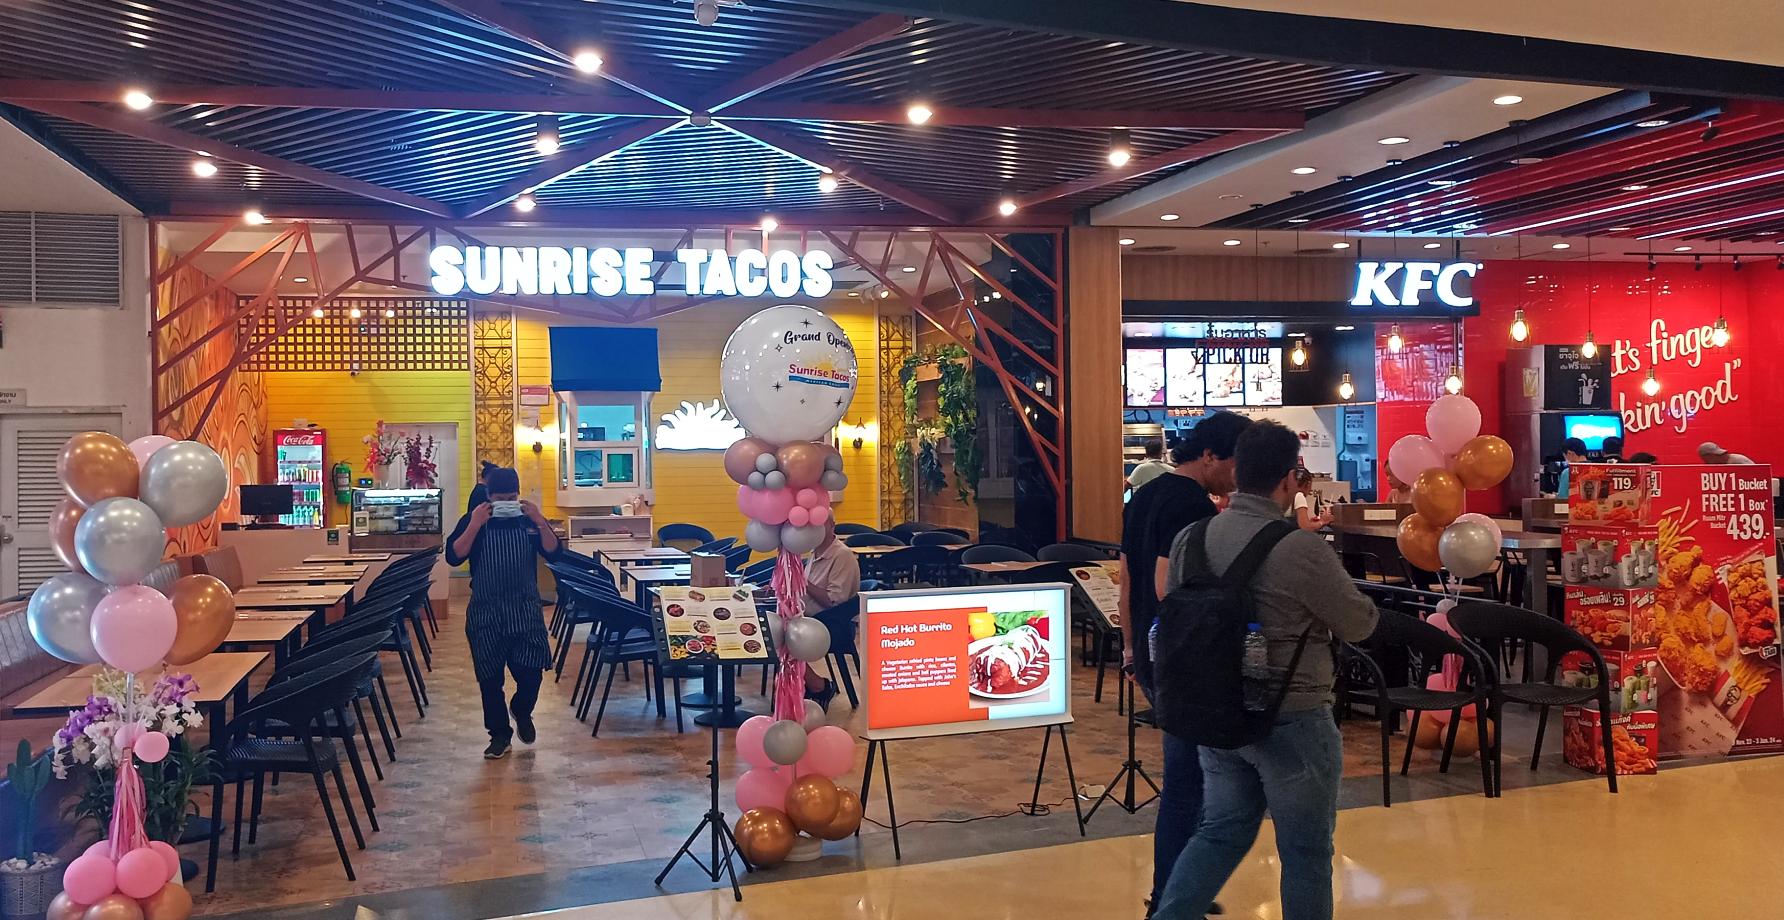 Sunrise Tacos at CentralFestival, Beach Road Pattaya